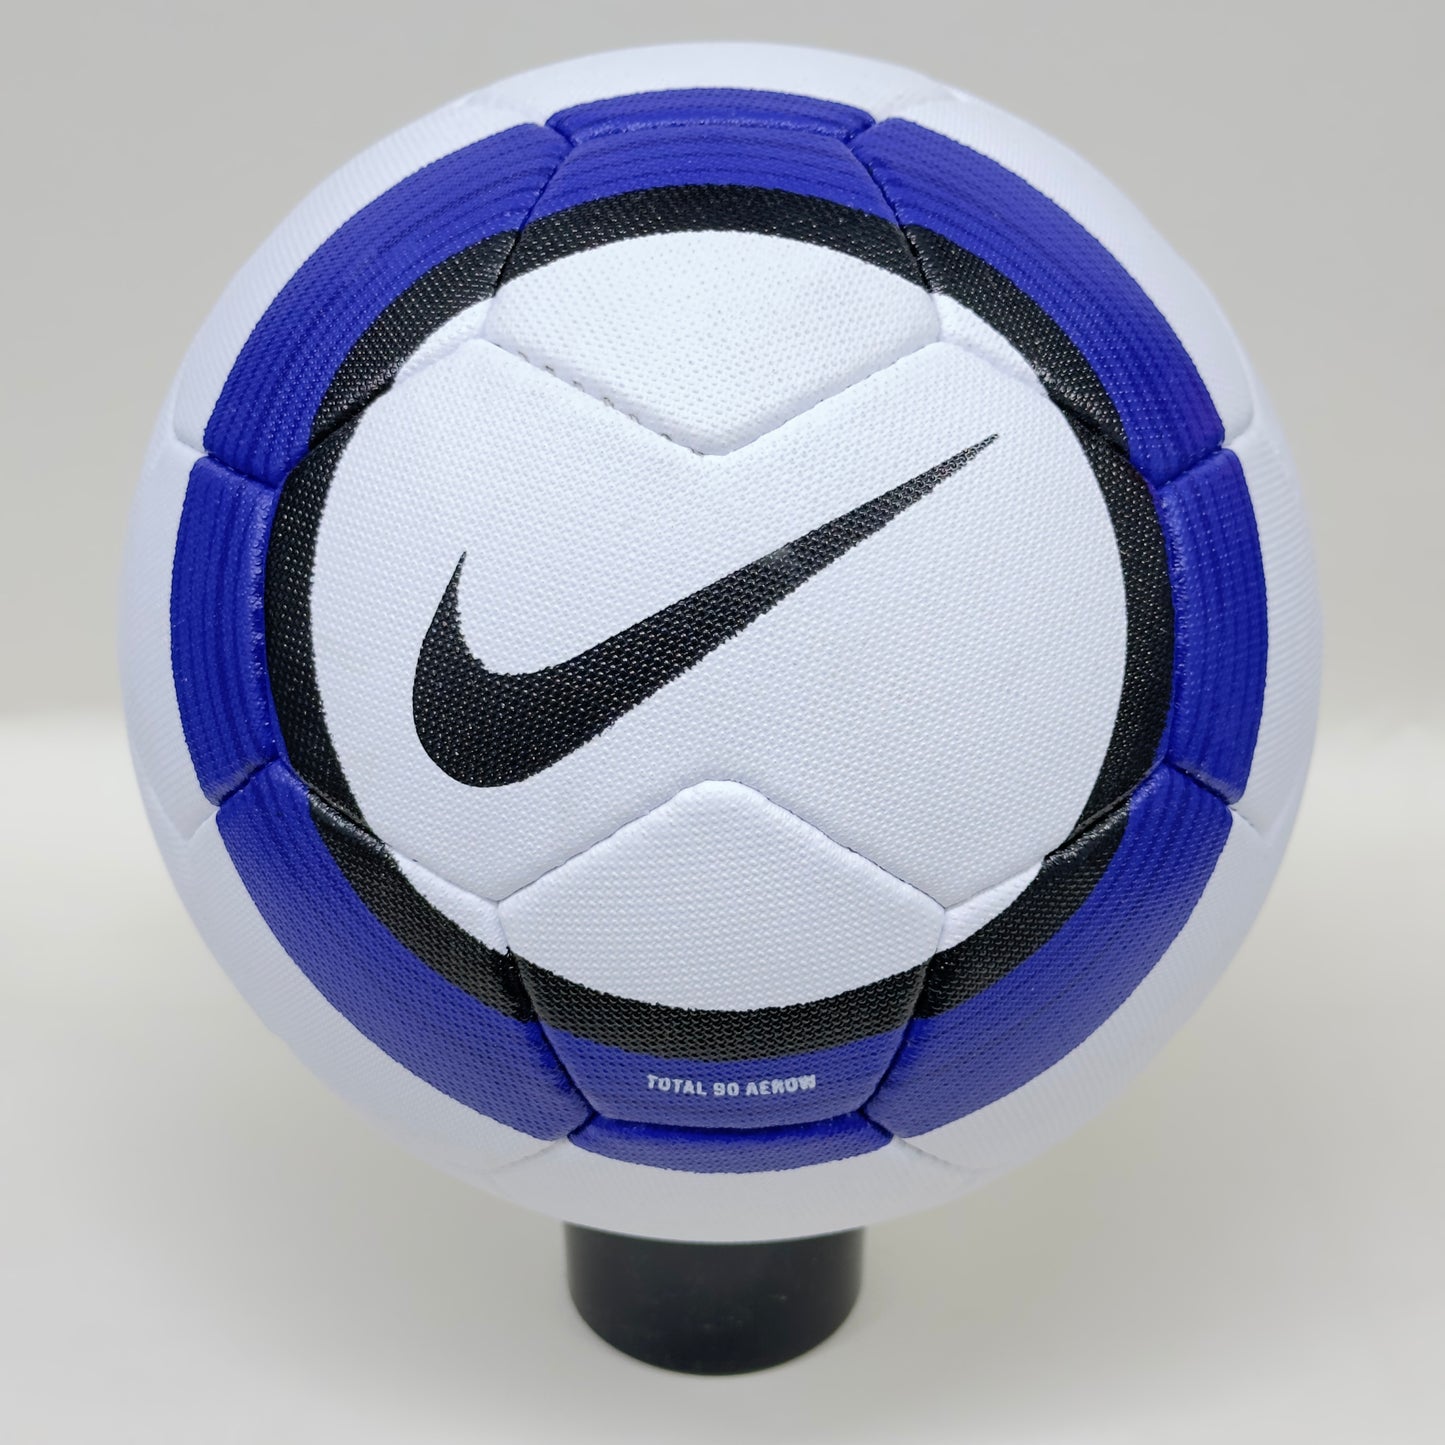 Nike Total 90 Aerow 1 | The FA Premier League l 2005 | Size 5 | Barclays 01